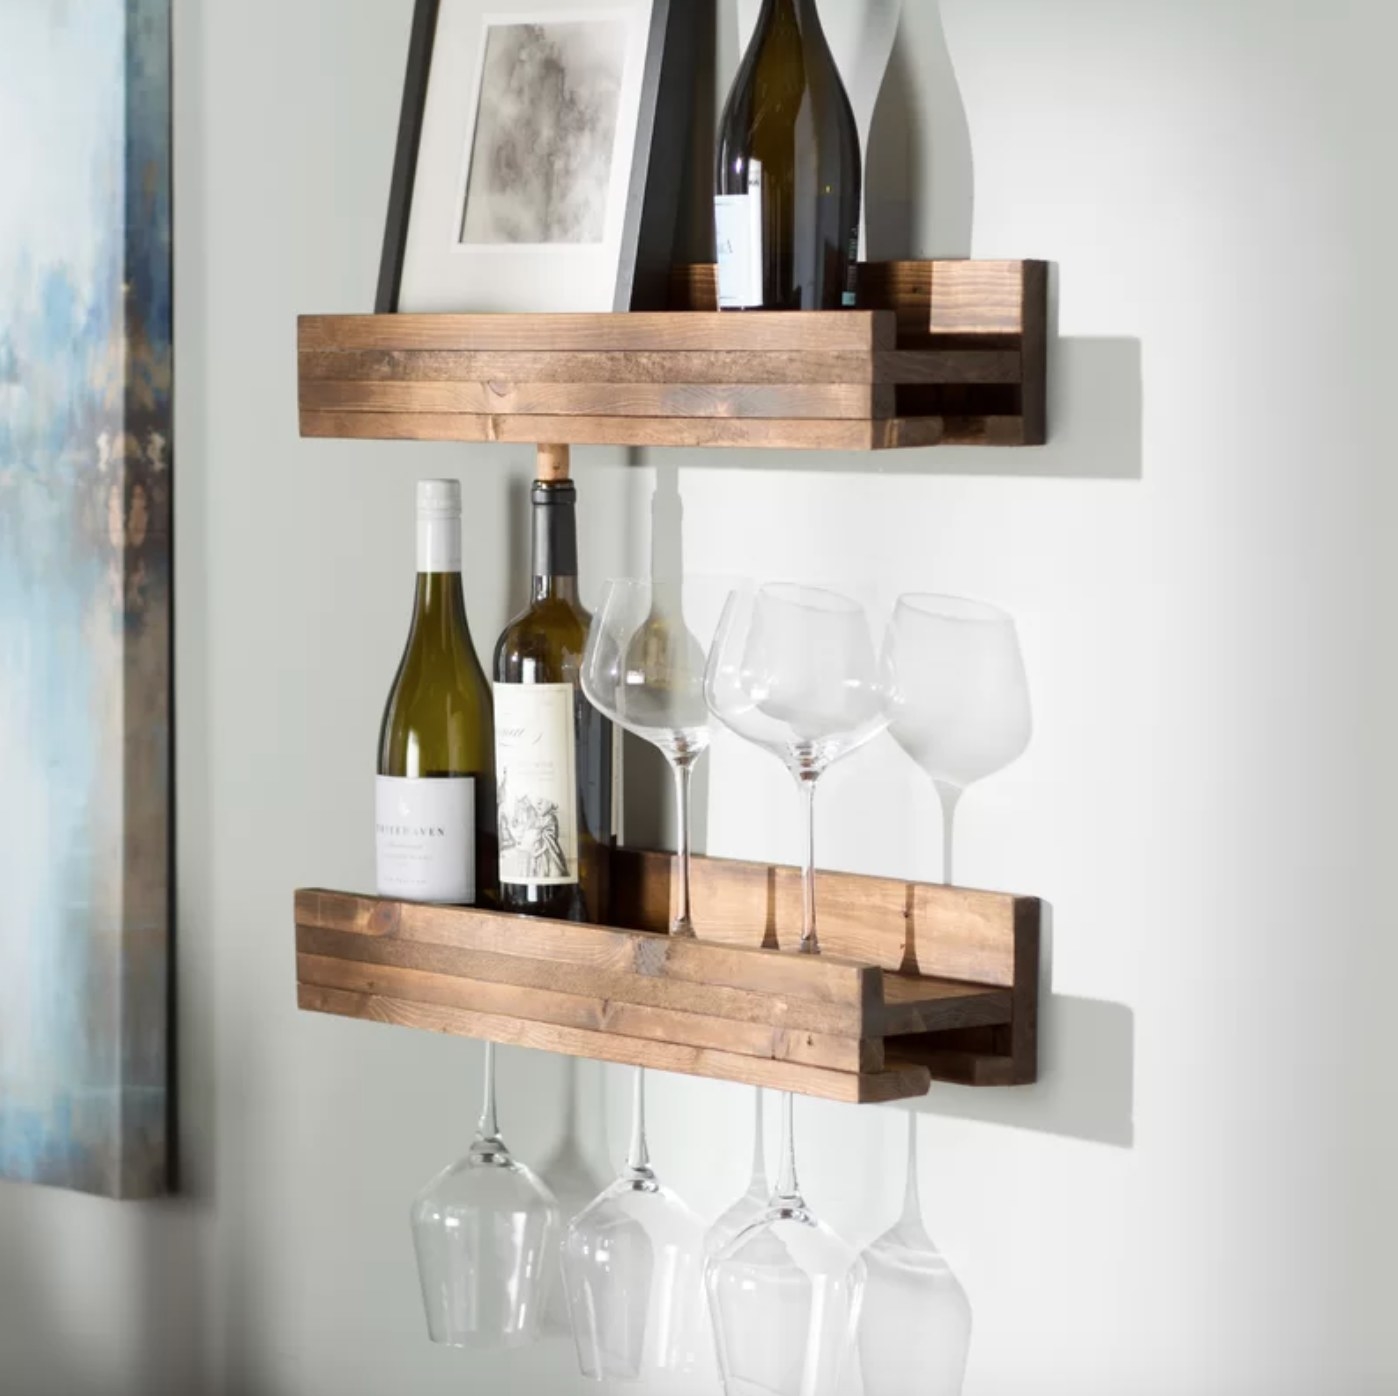 The set of two wall-mounted wine glass racks